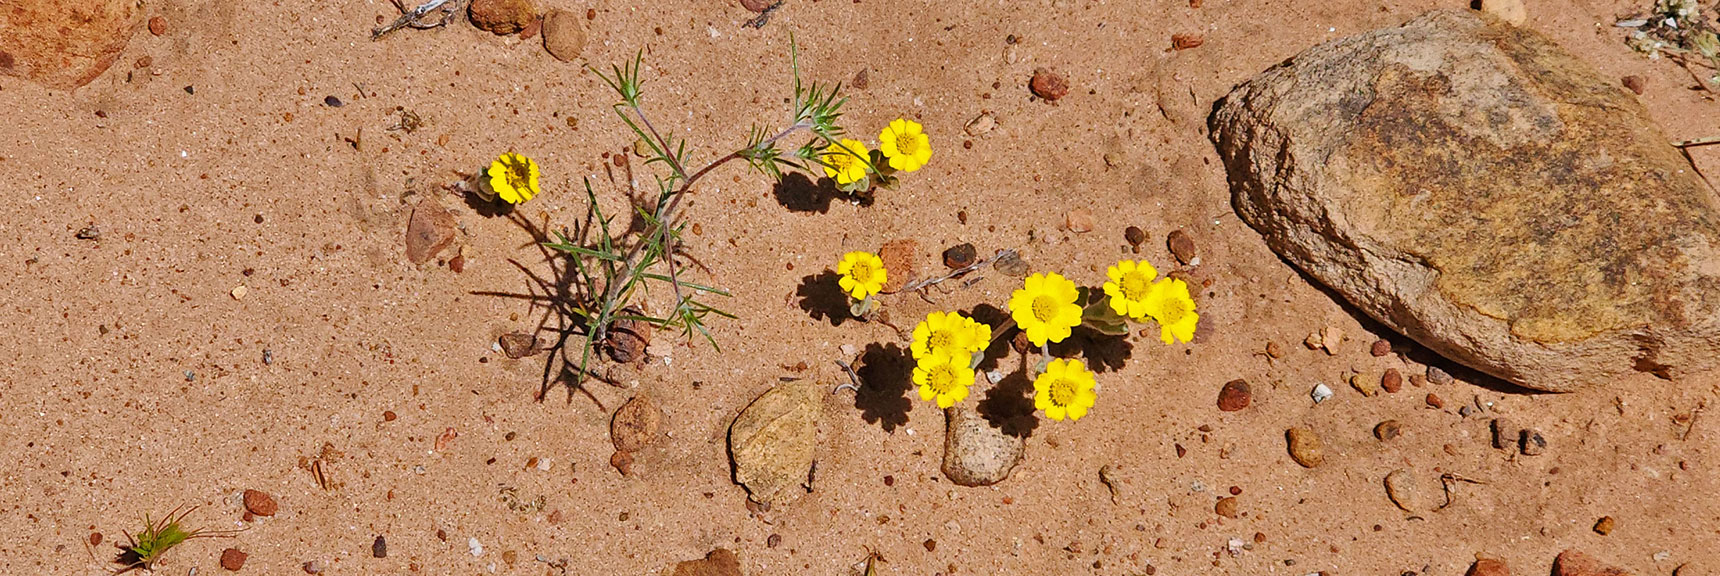 California Coreopsis, Leptosyne Californica : Annual Mojave Desert Wildflowers | Juniper Canyon | Red Rock Canyon National Conservation Area, Nevada | David Smith | LasVegasAreaTrails.com